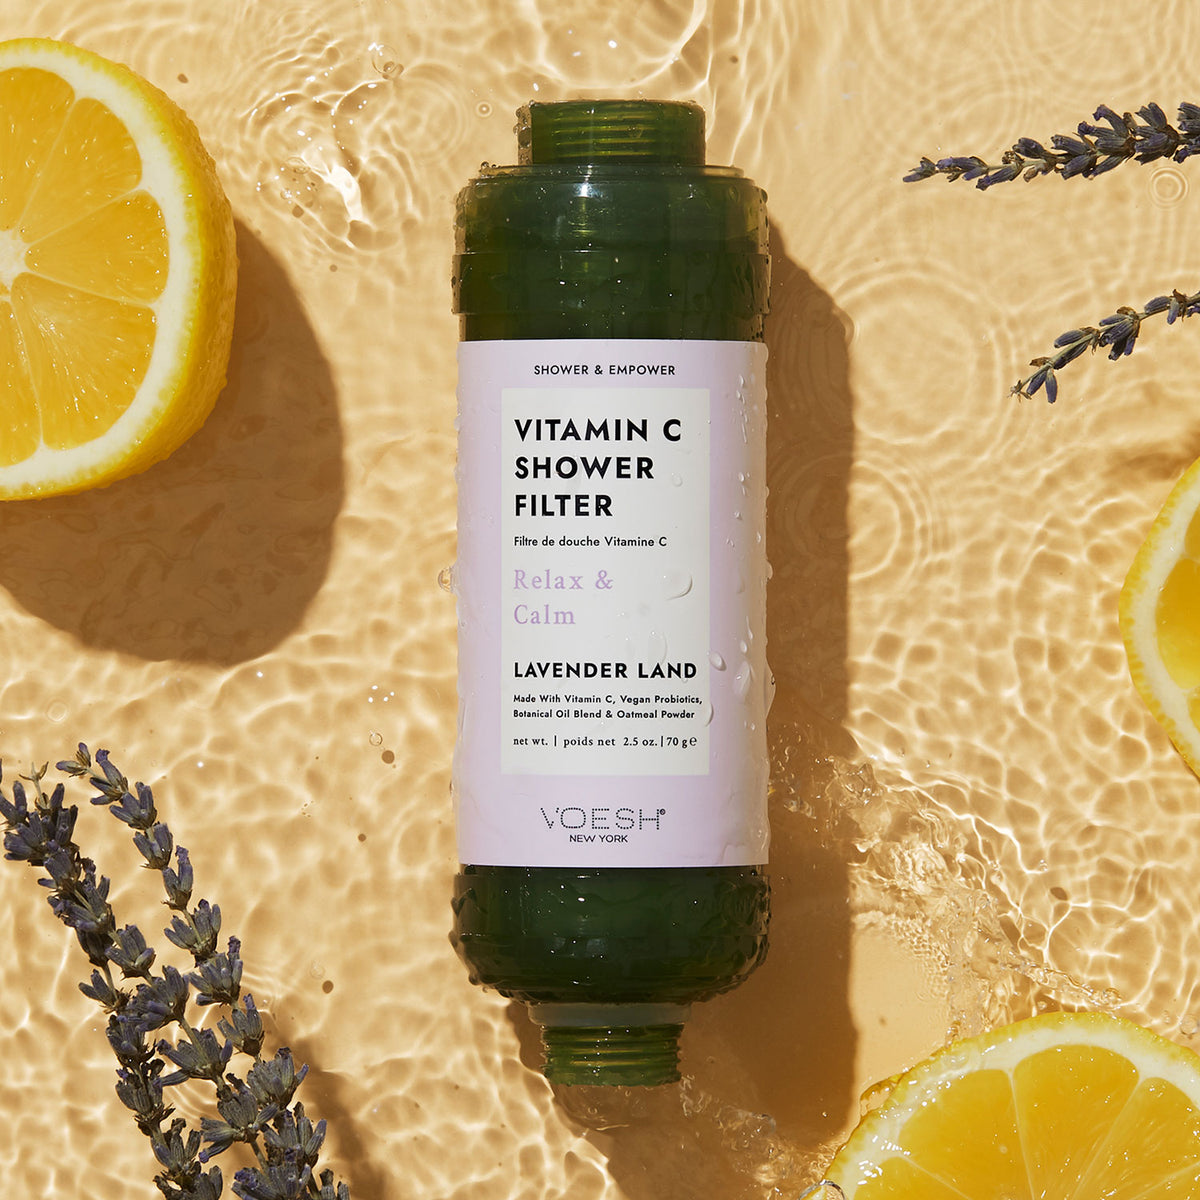 VOESH New York's Vitamin C Shower Filter in Lavender Land